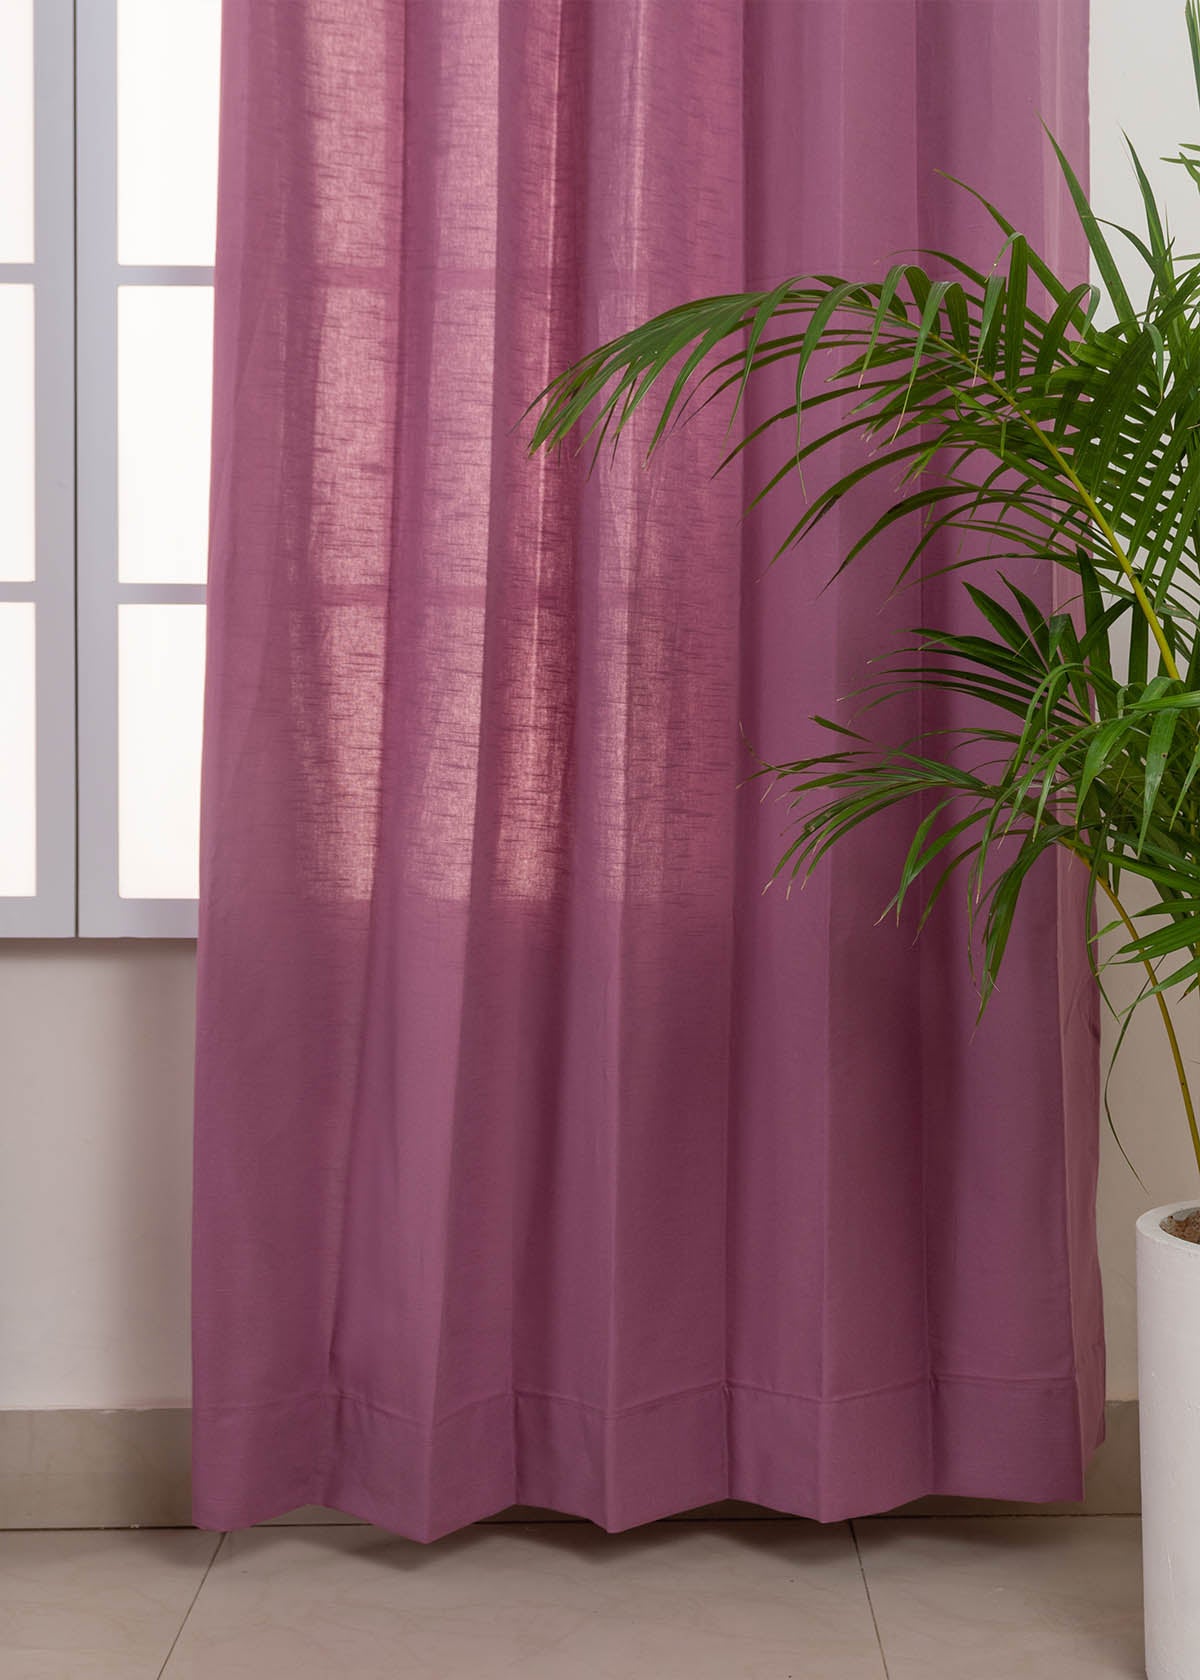 Solid Grape 100% Customizable Cotton plain curtain for bedroom - Room darkening